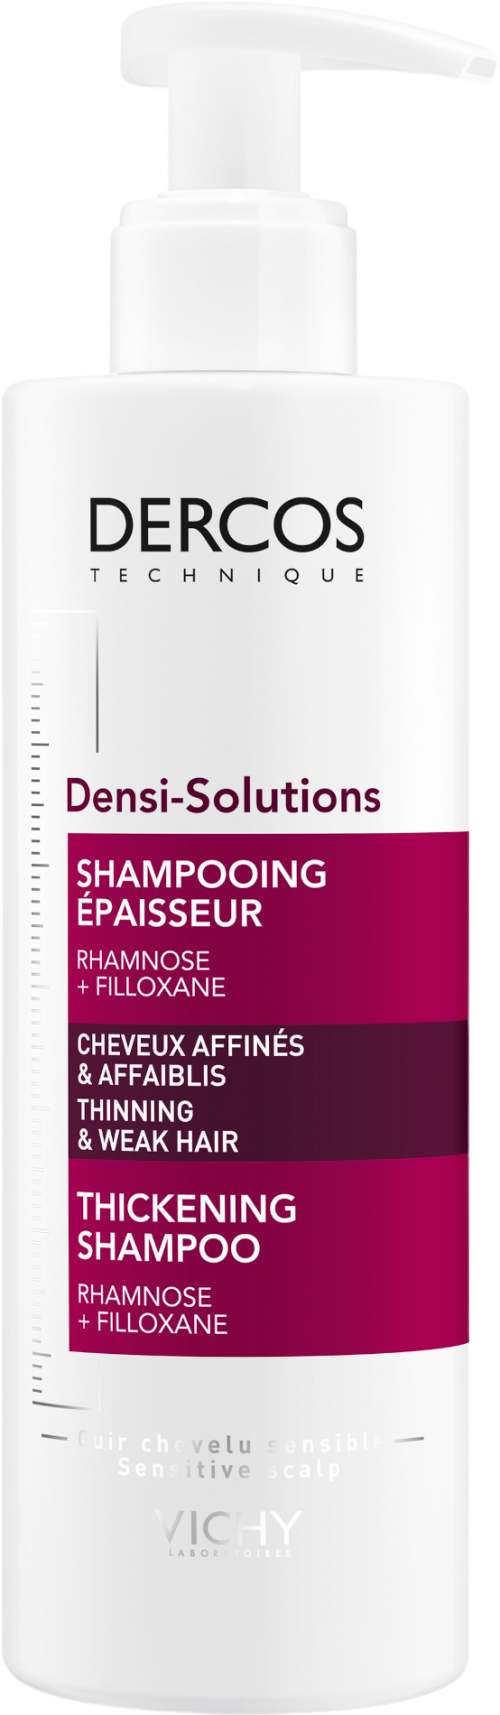 VICHY Dercos Densi-Solutions Thickening Shampoo 250 ml